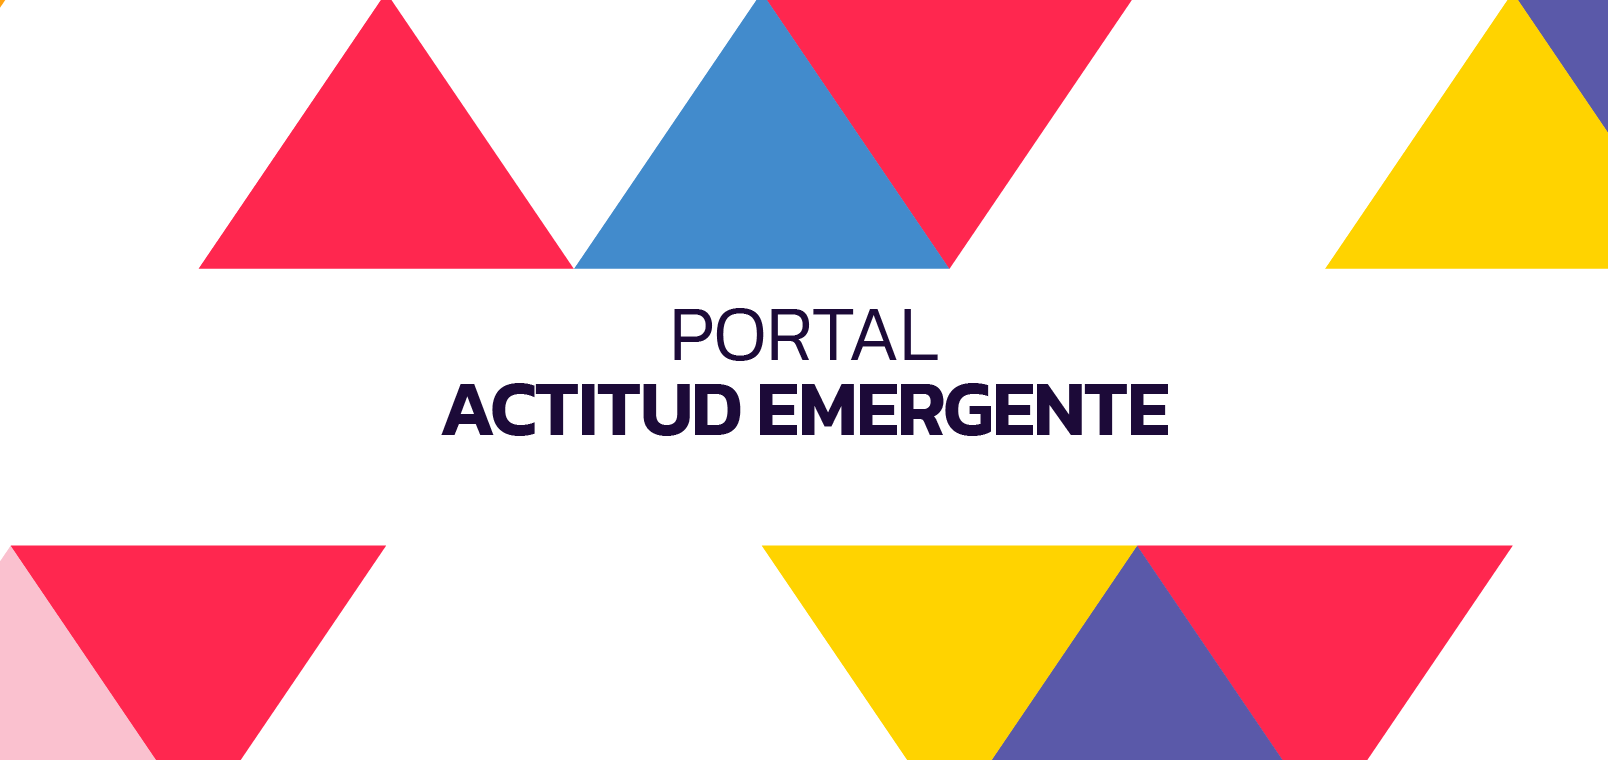 Portal Actitud Emergente